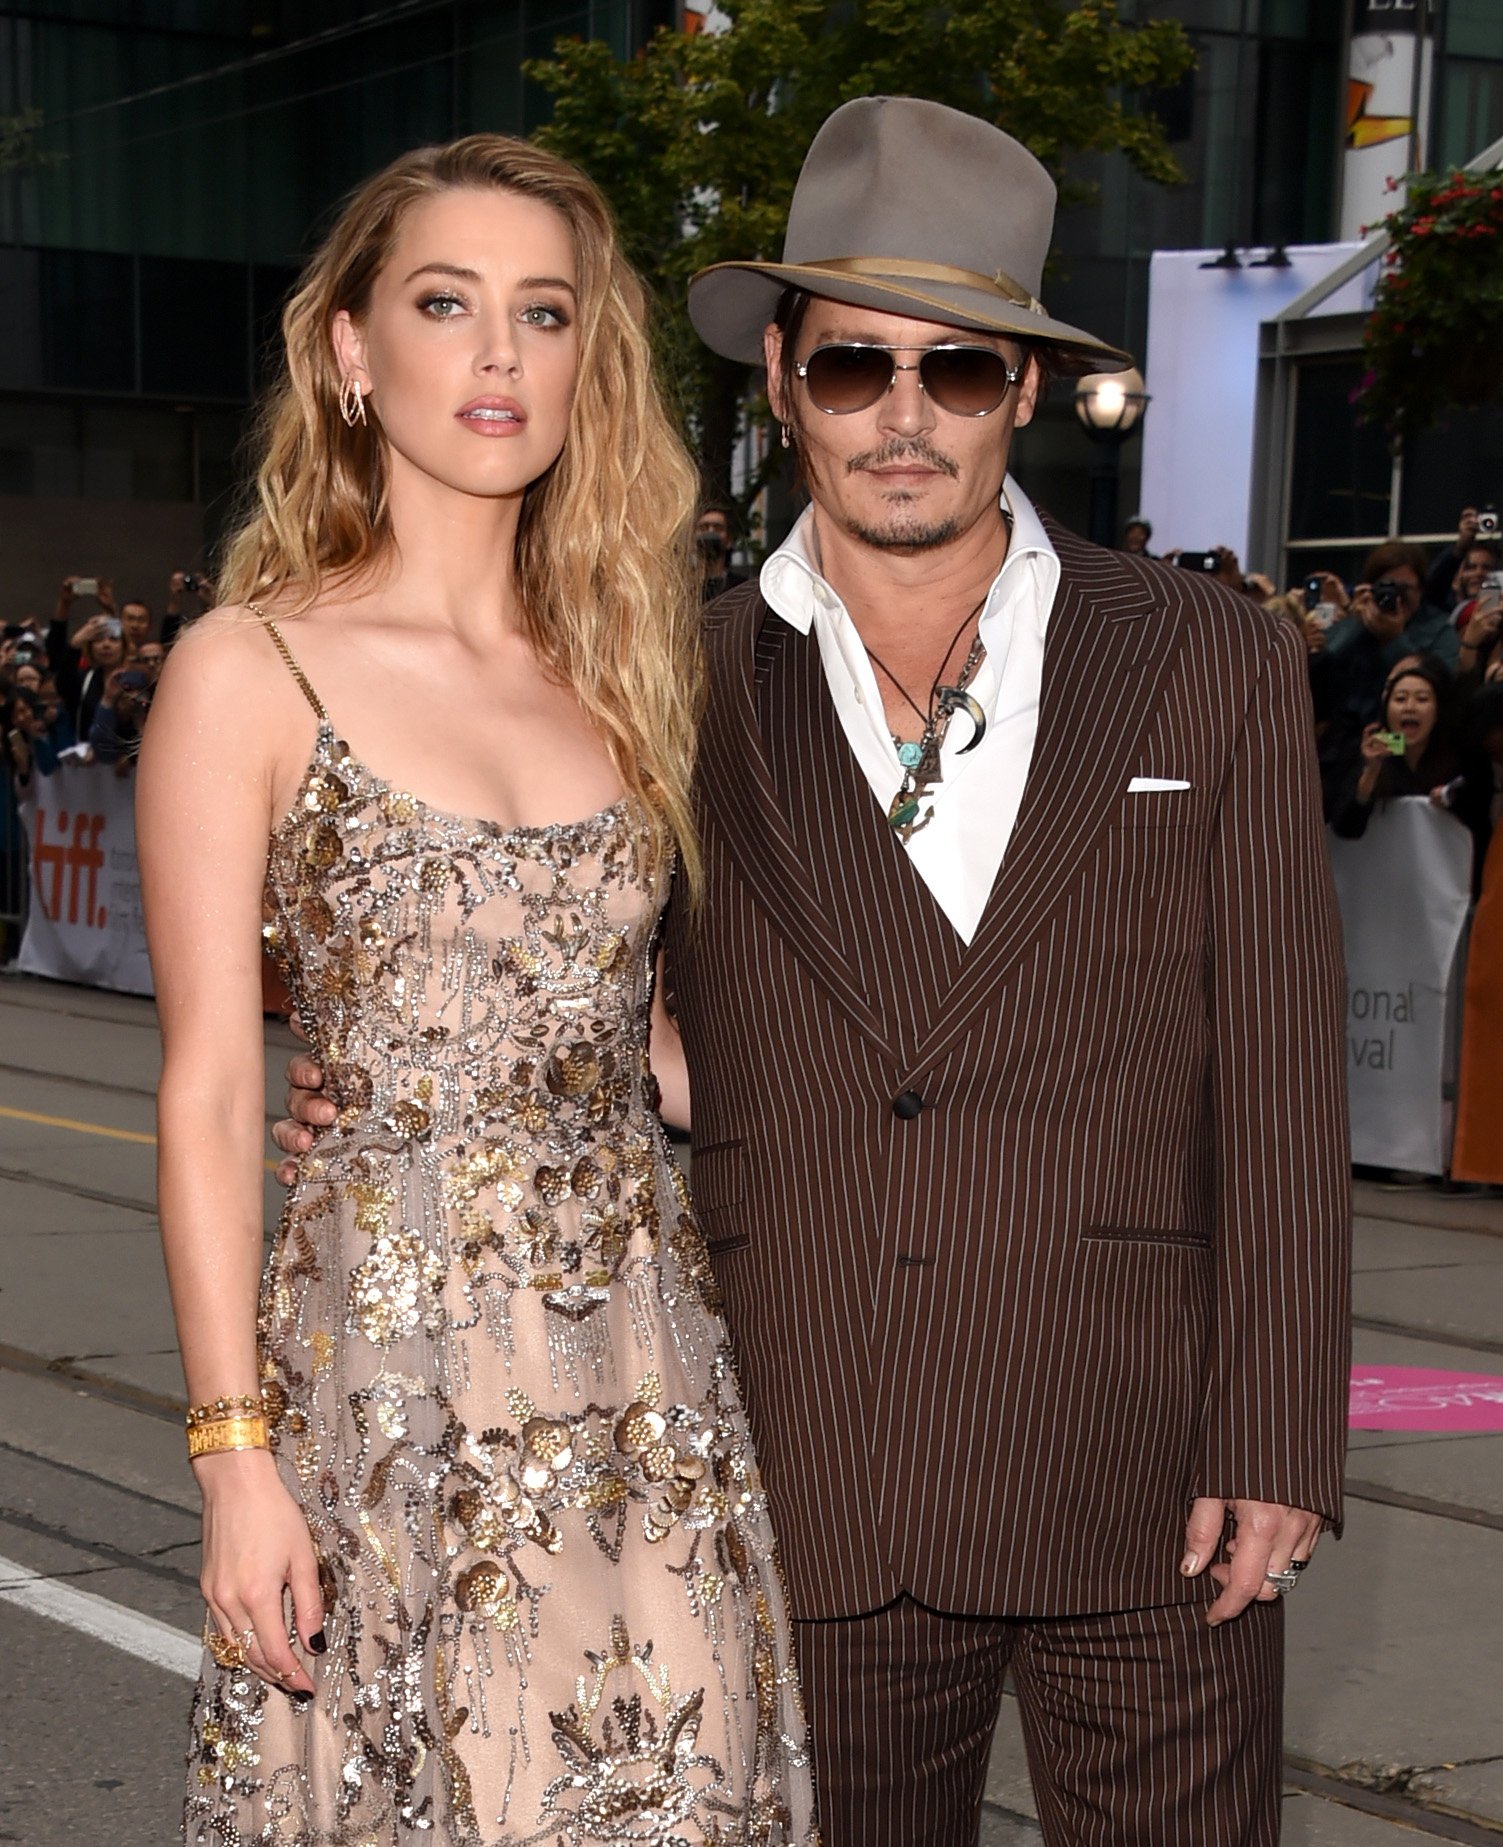 Amber Heard and Johnny Depp at "The Danish Girl" premiere at the Toronto International Film Festival on September 12, 2015, in Toronto, Canada. | Source: Jason Merritt/Getty Images